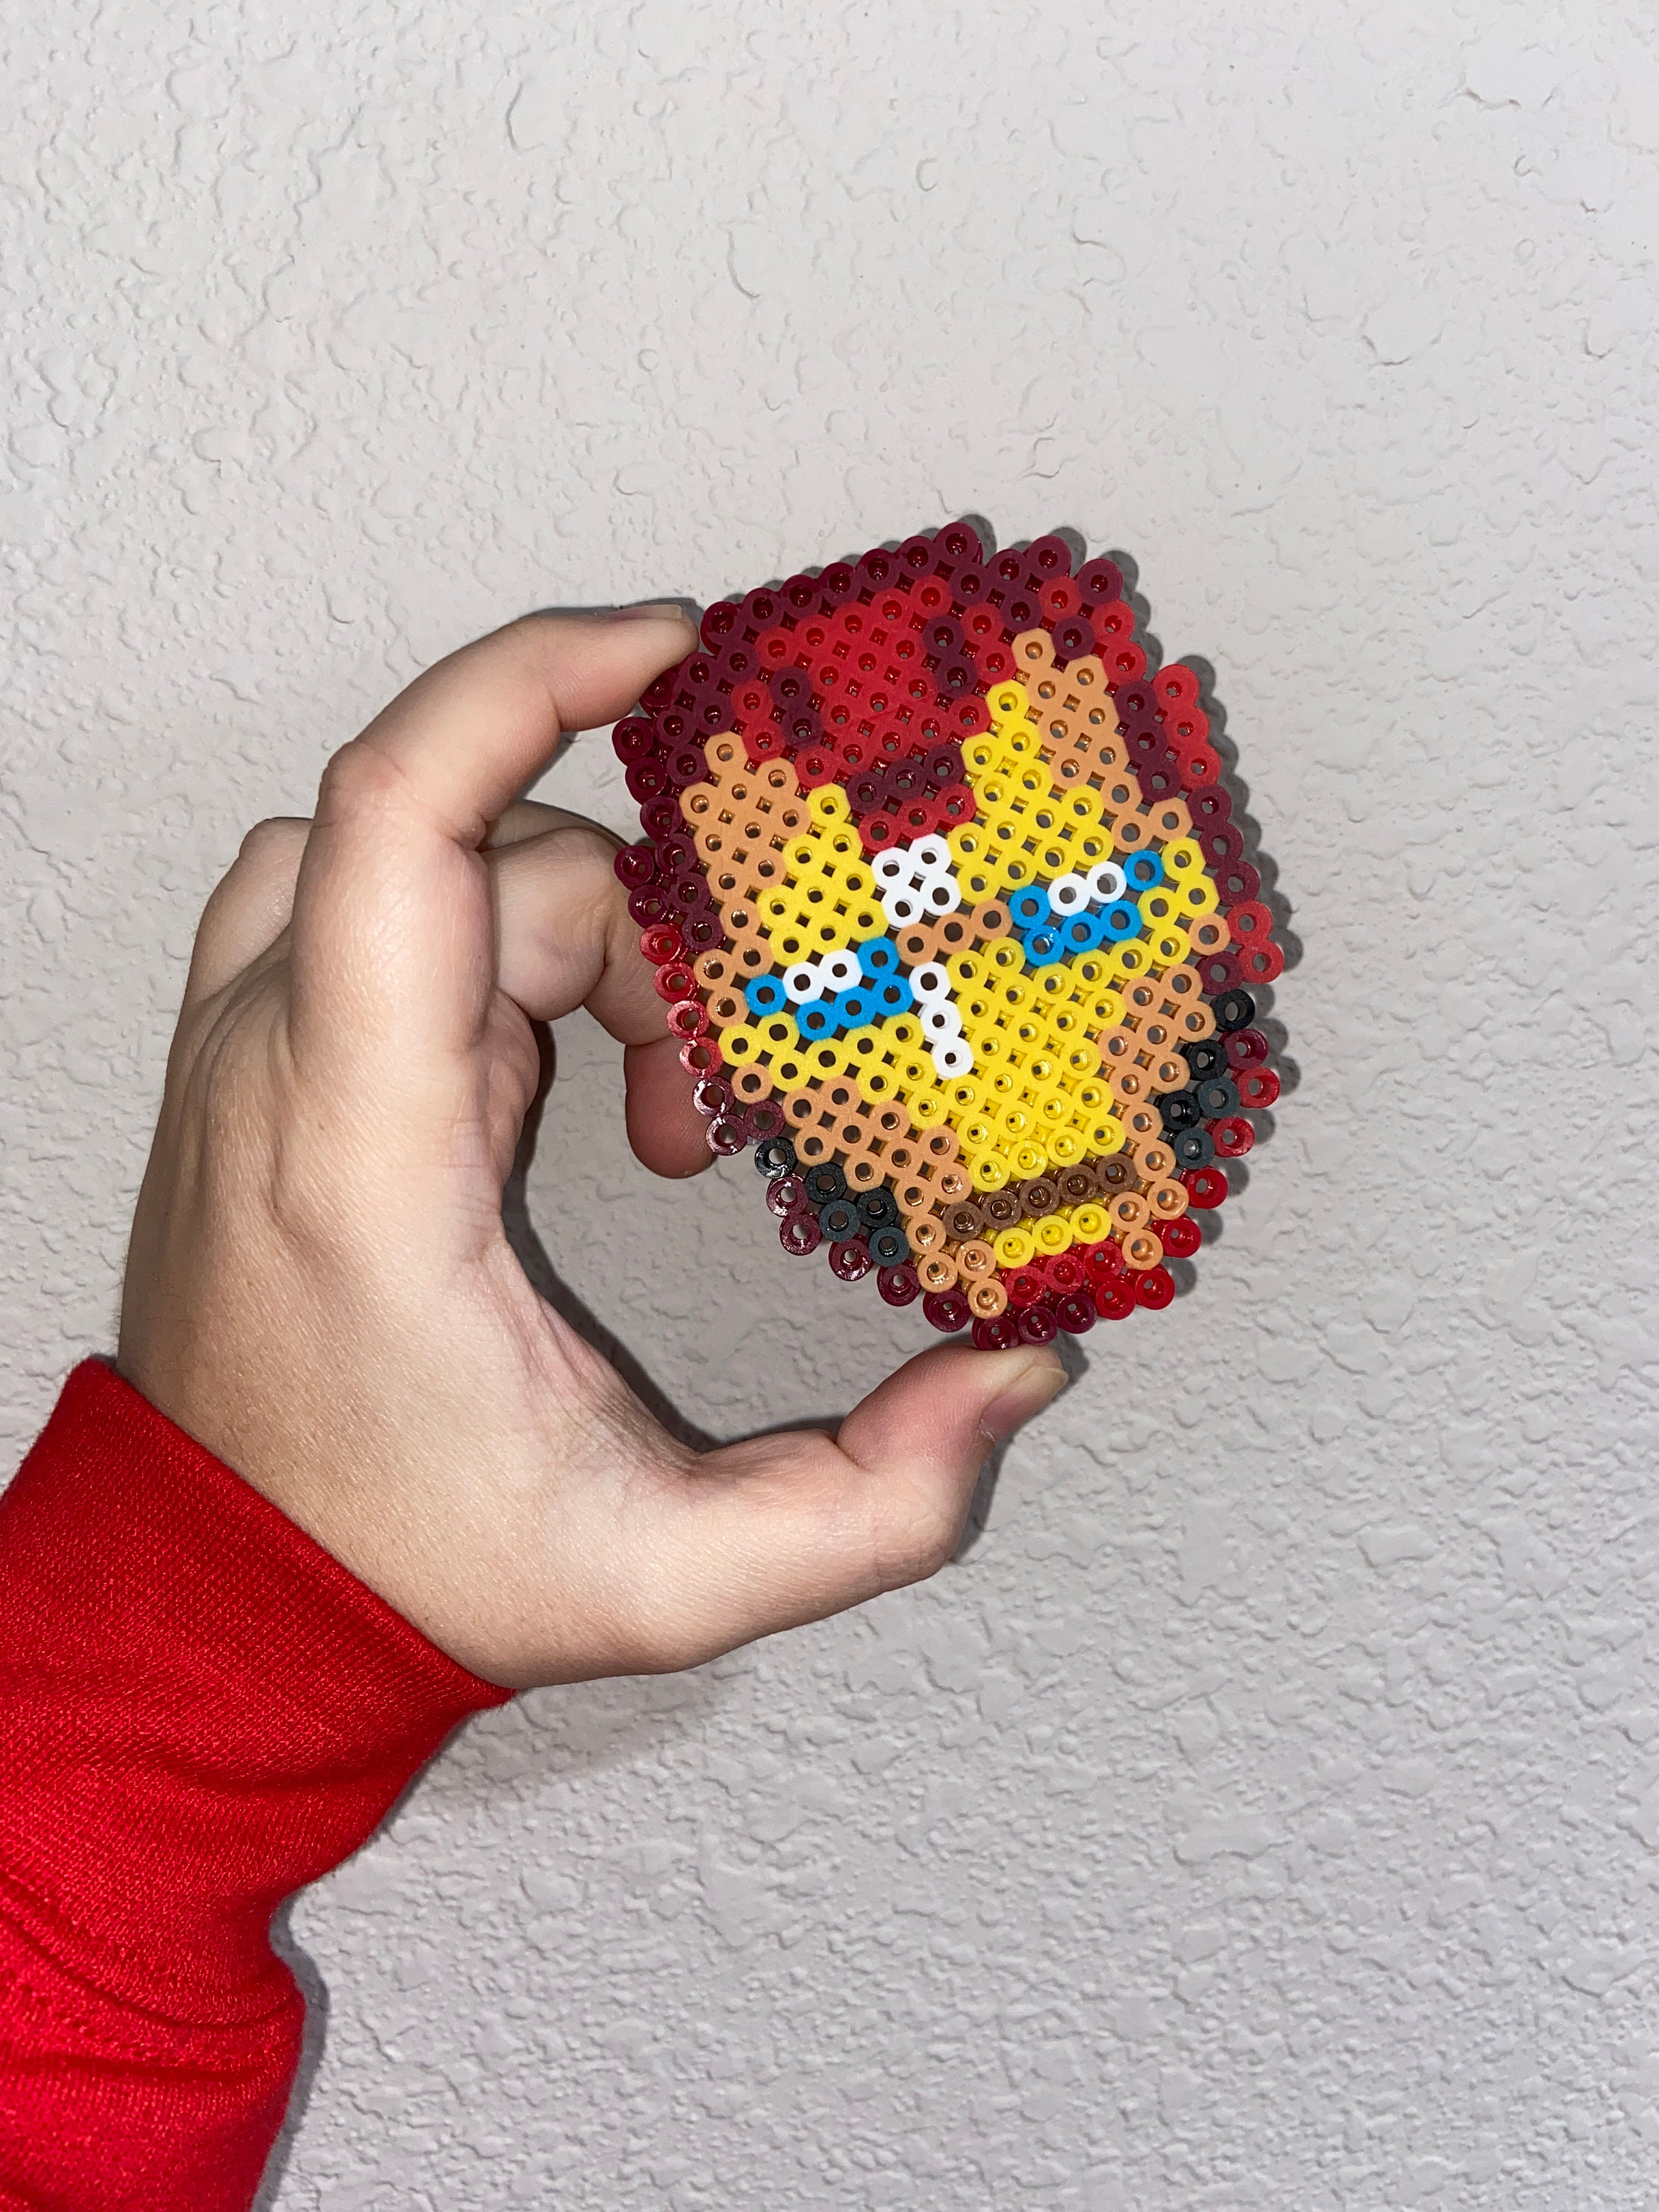 Iron-Man Mini Perler beads  Perler beads, Perler crafts, Easy